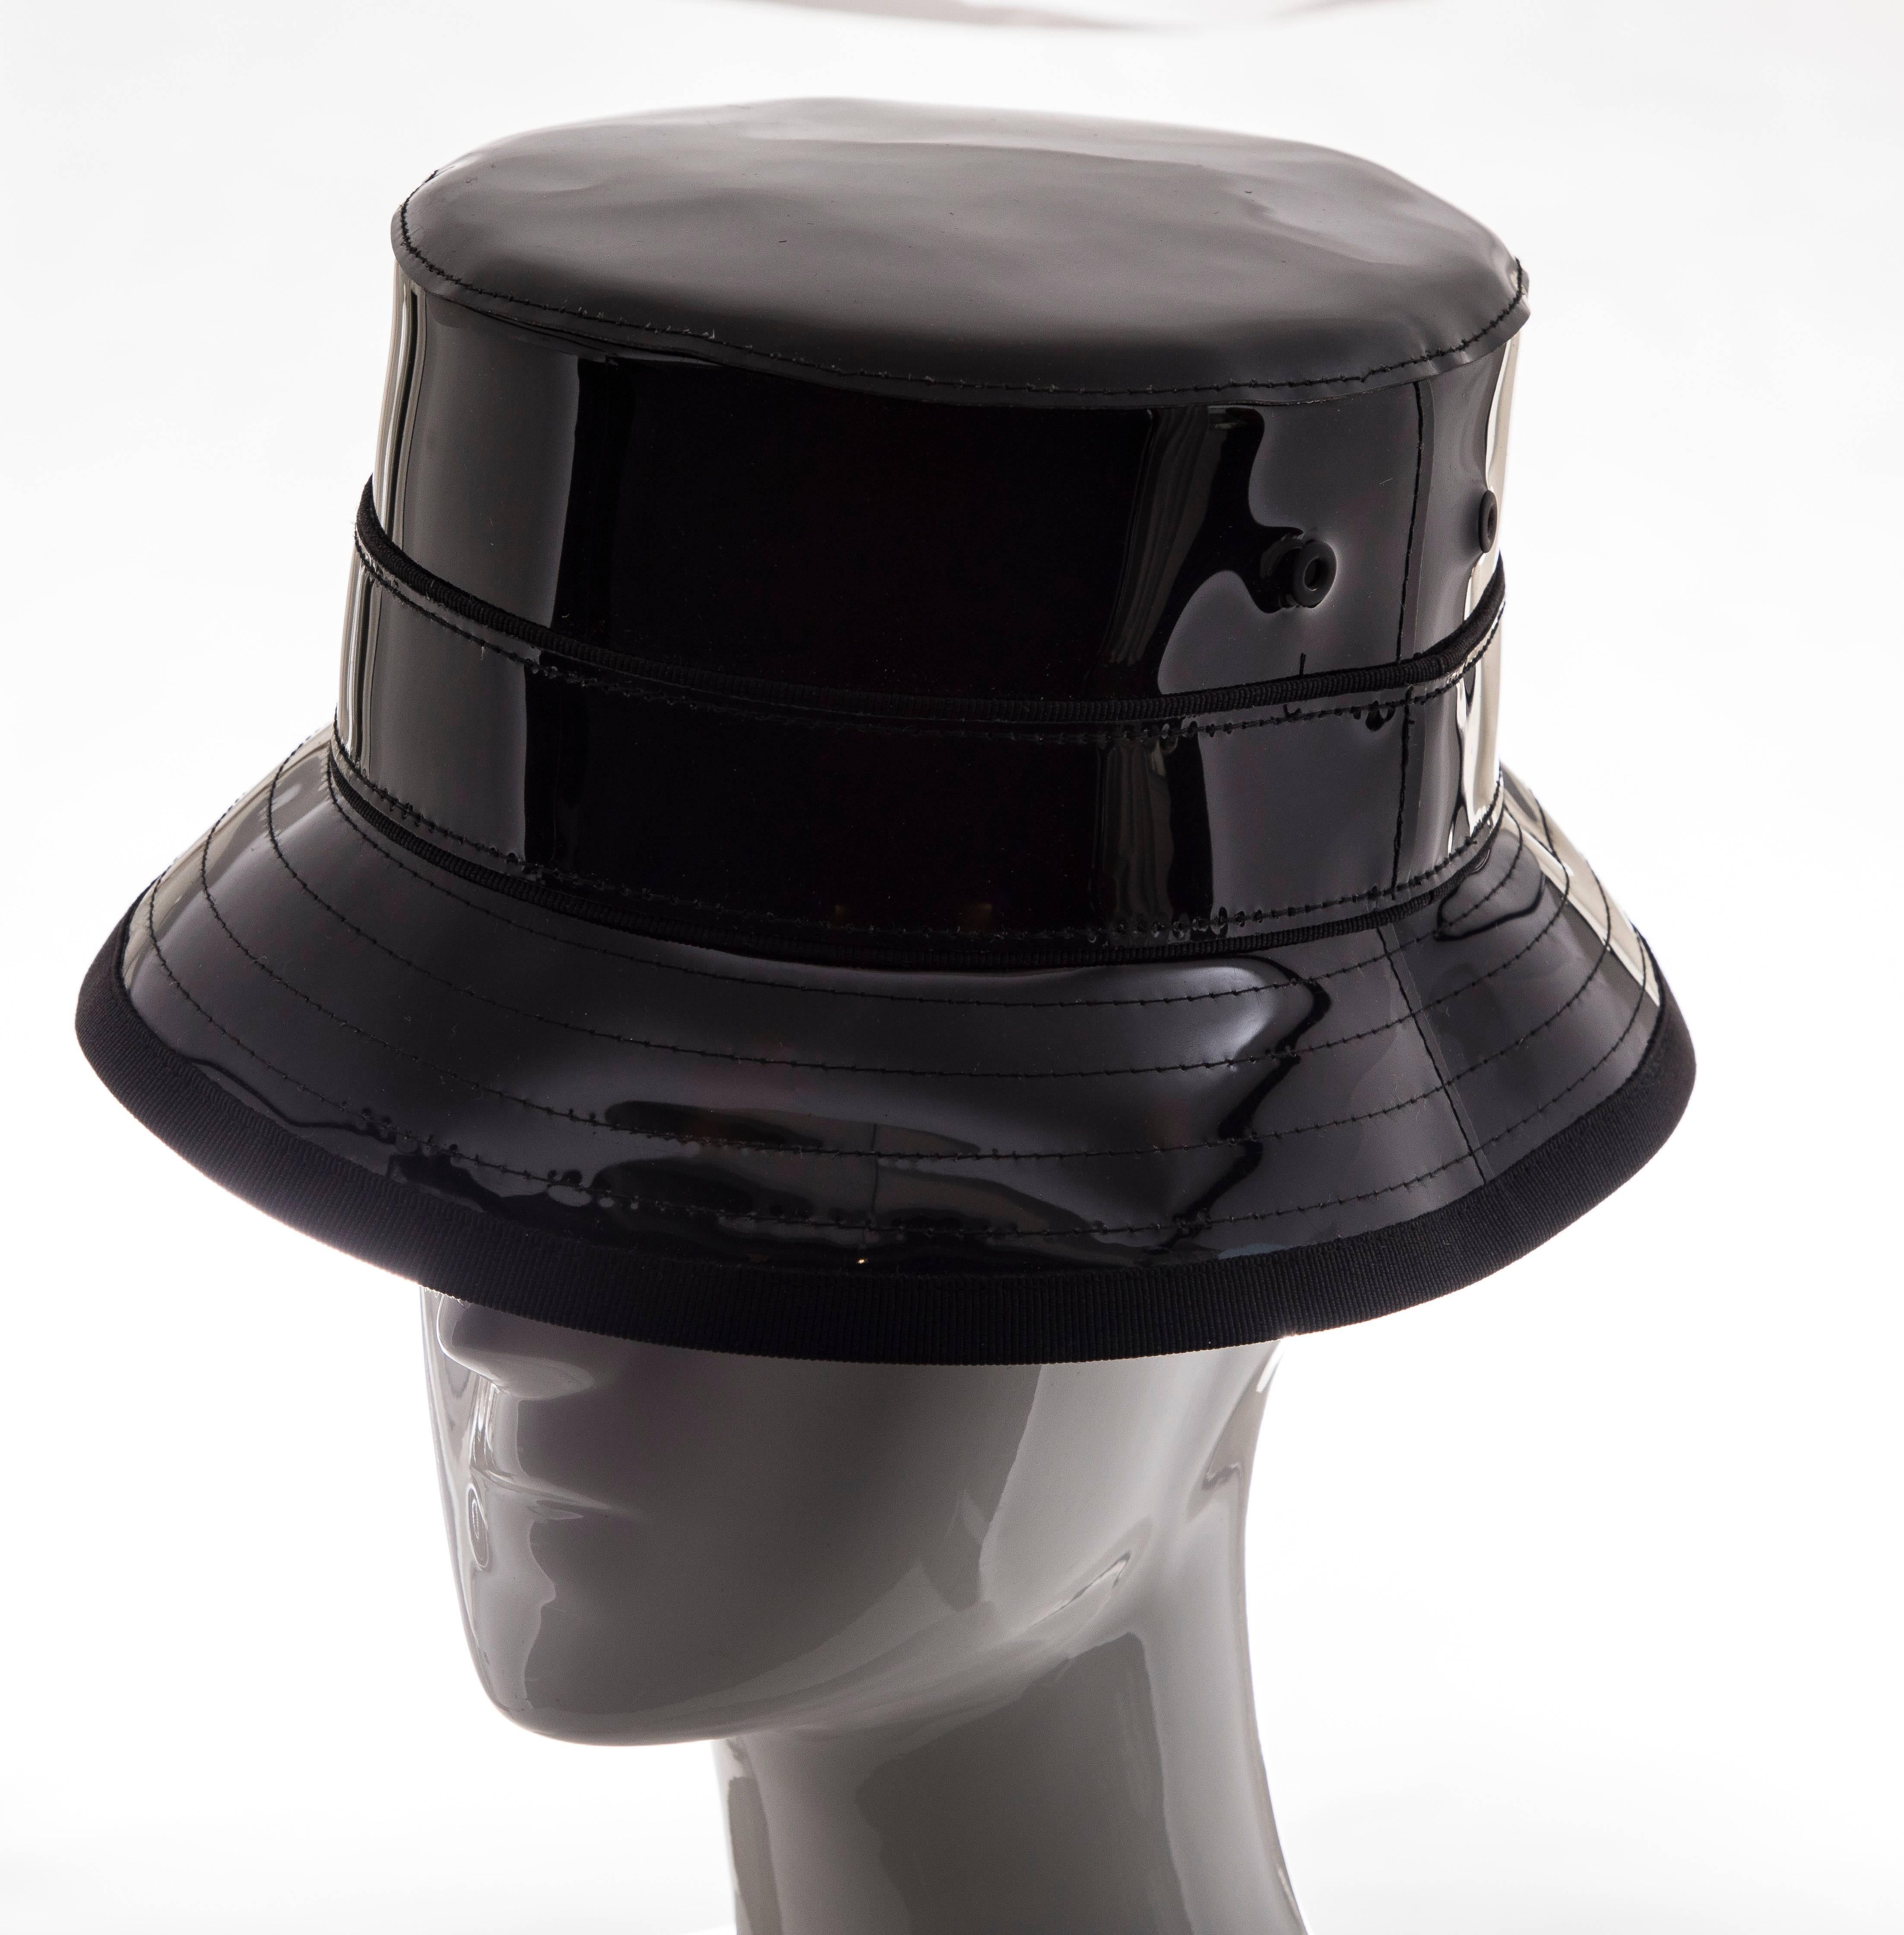 Givenchy Riccardo Tisci, Spring 2017 men's runway black patent leather bucket hat.

Designer size 59.

Circumference: 23.25, Brim: 2
